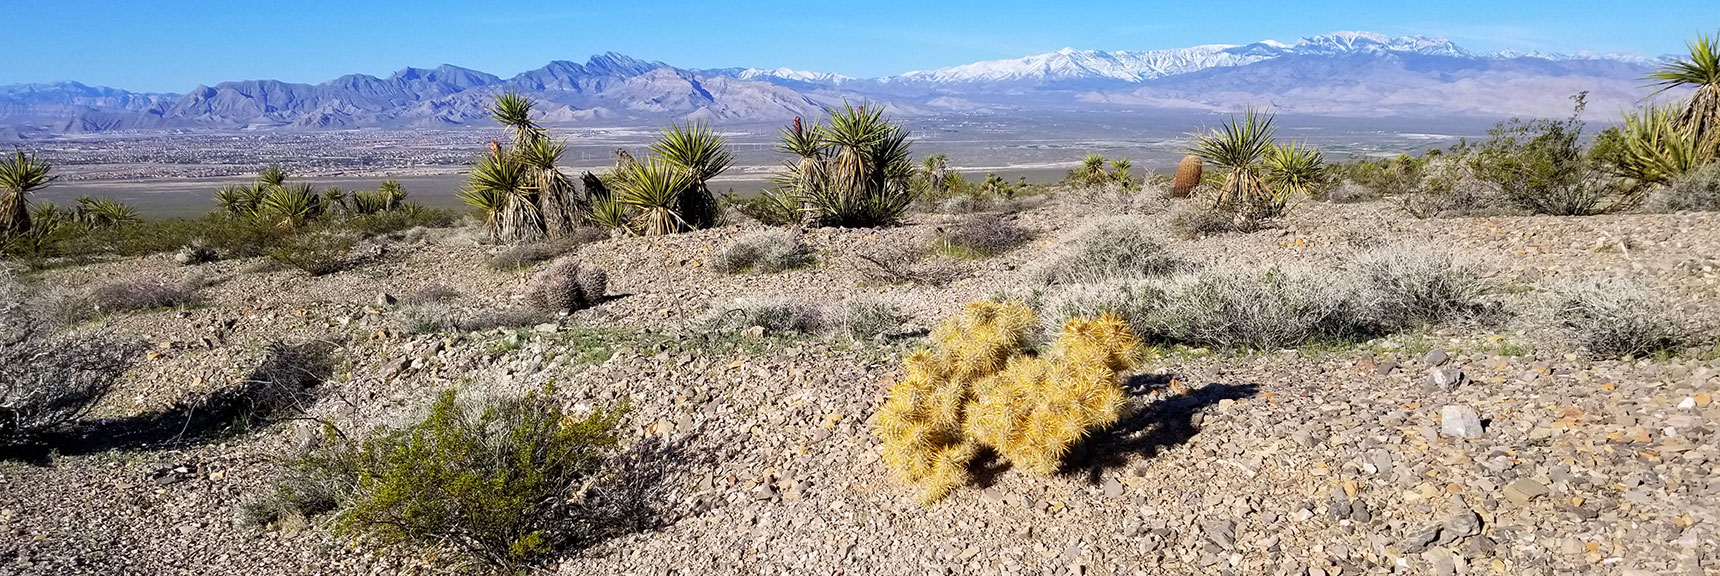 Assortment of Desert Plants South of Gass Peak, Nevada